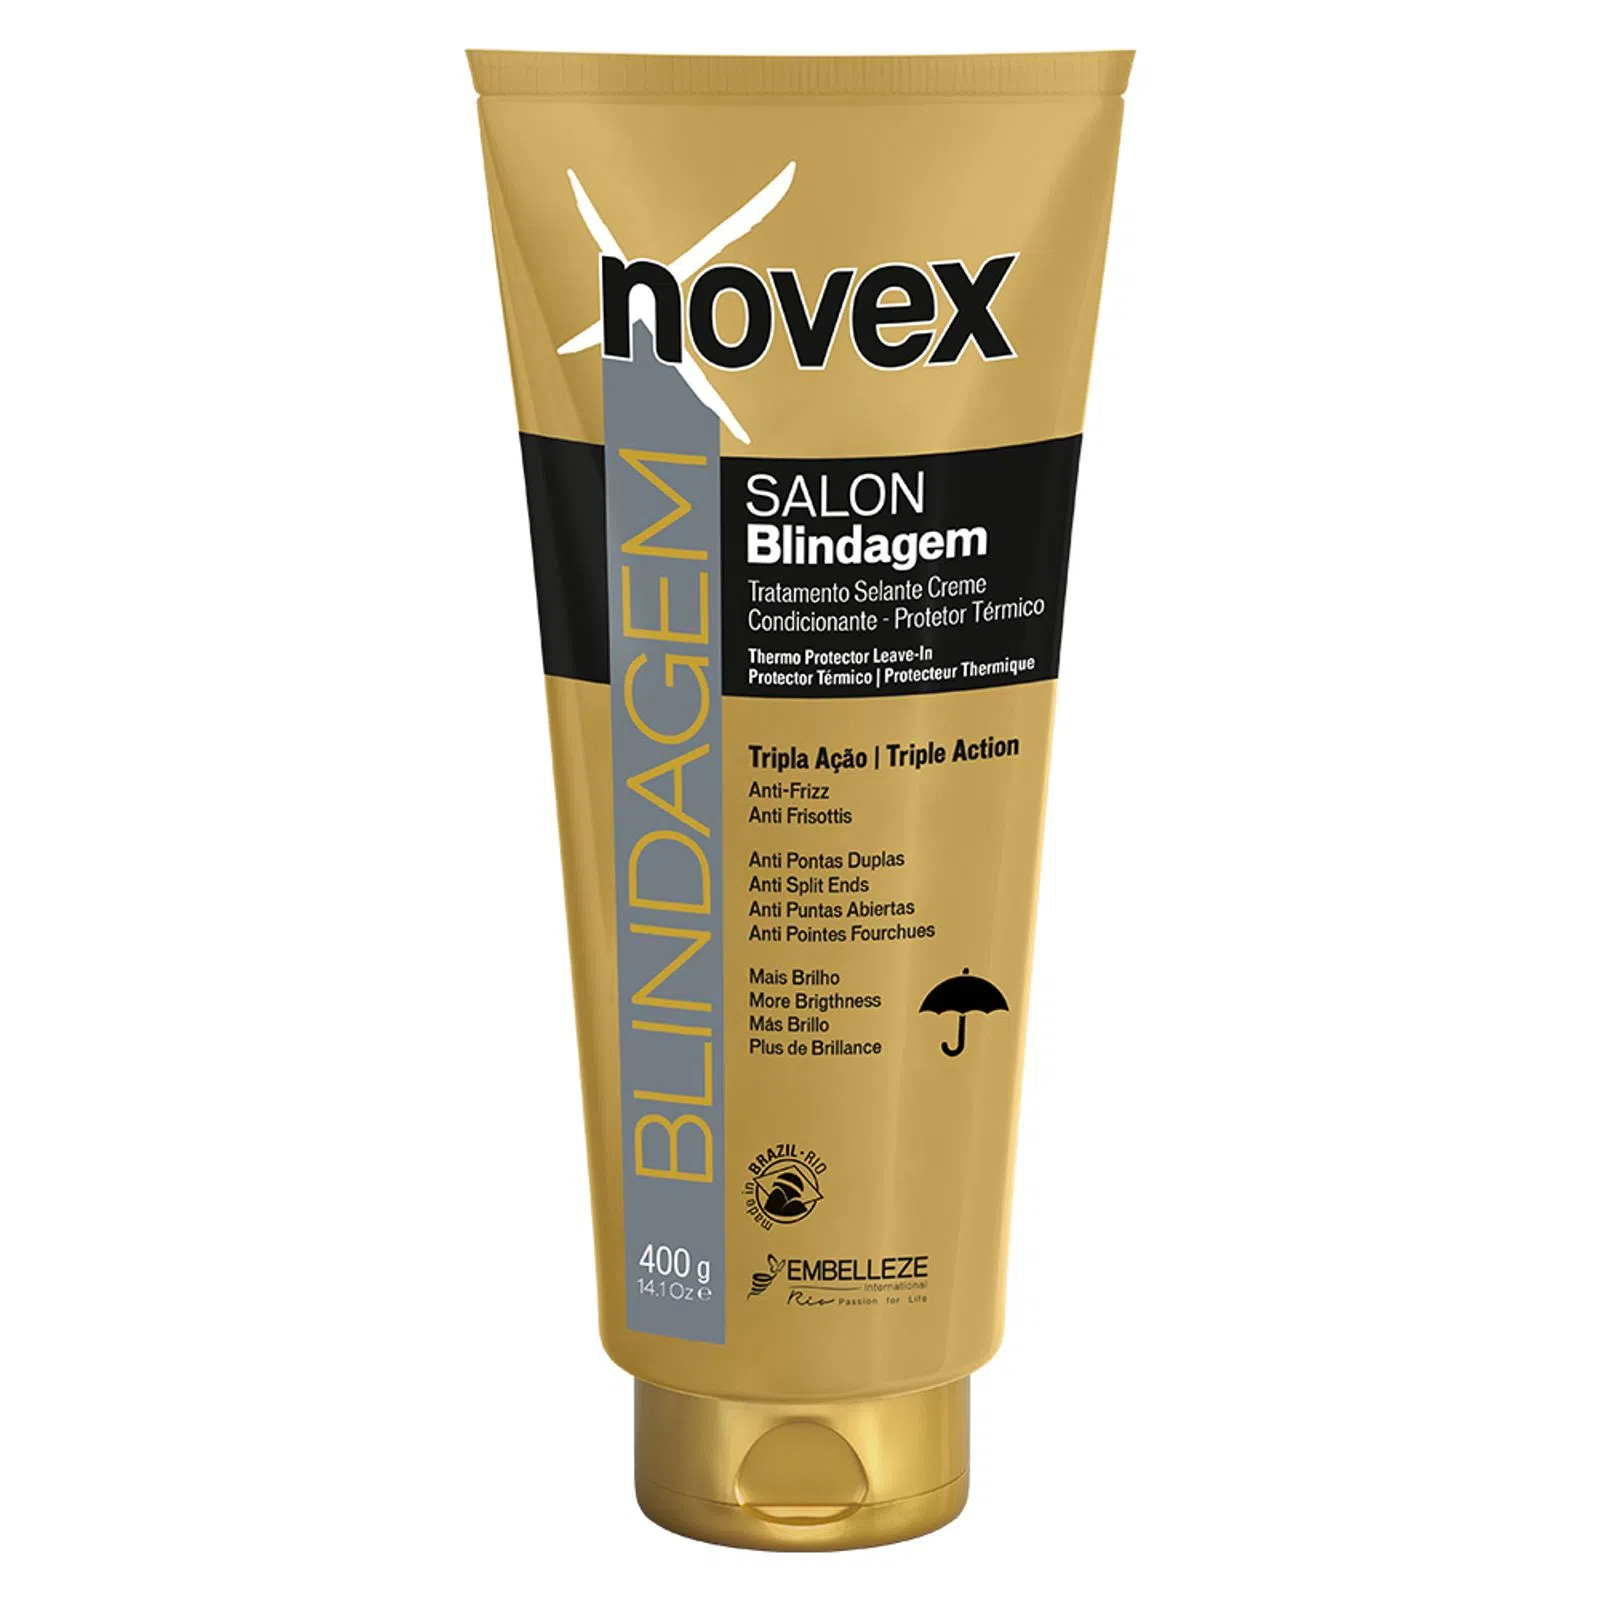 NOVEX Blindagem Leave-in Behandlungscreme - Creme de Tratamento Protetor Térmico, 200g